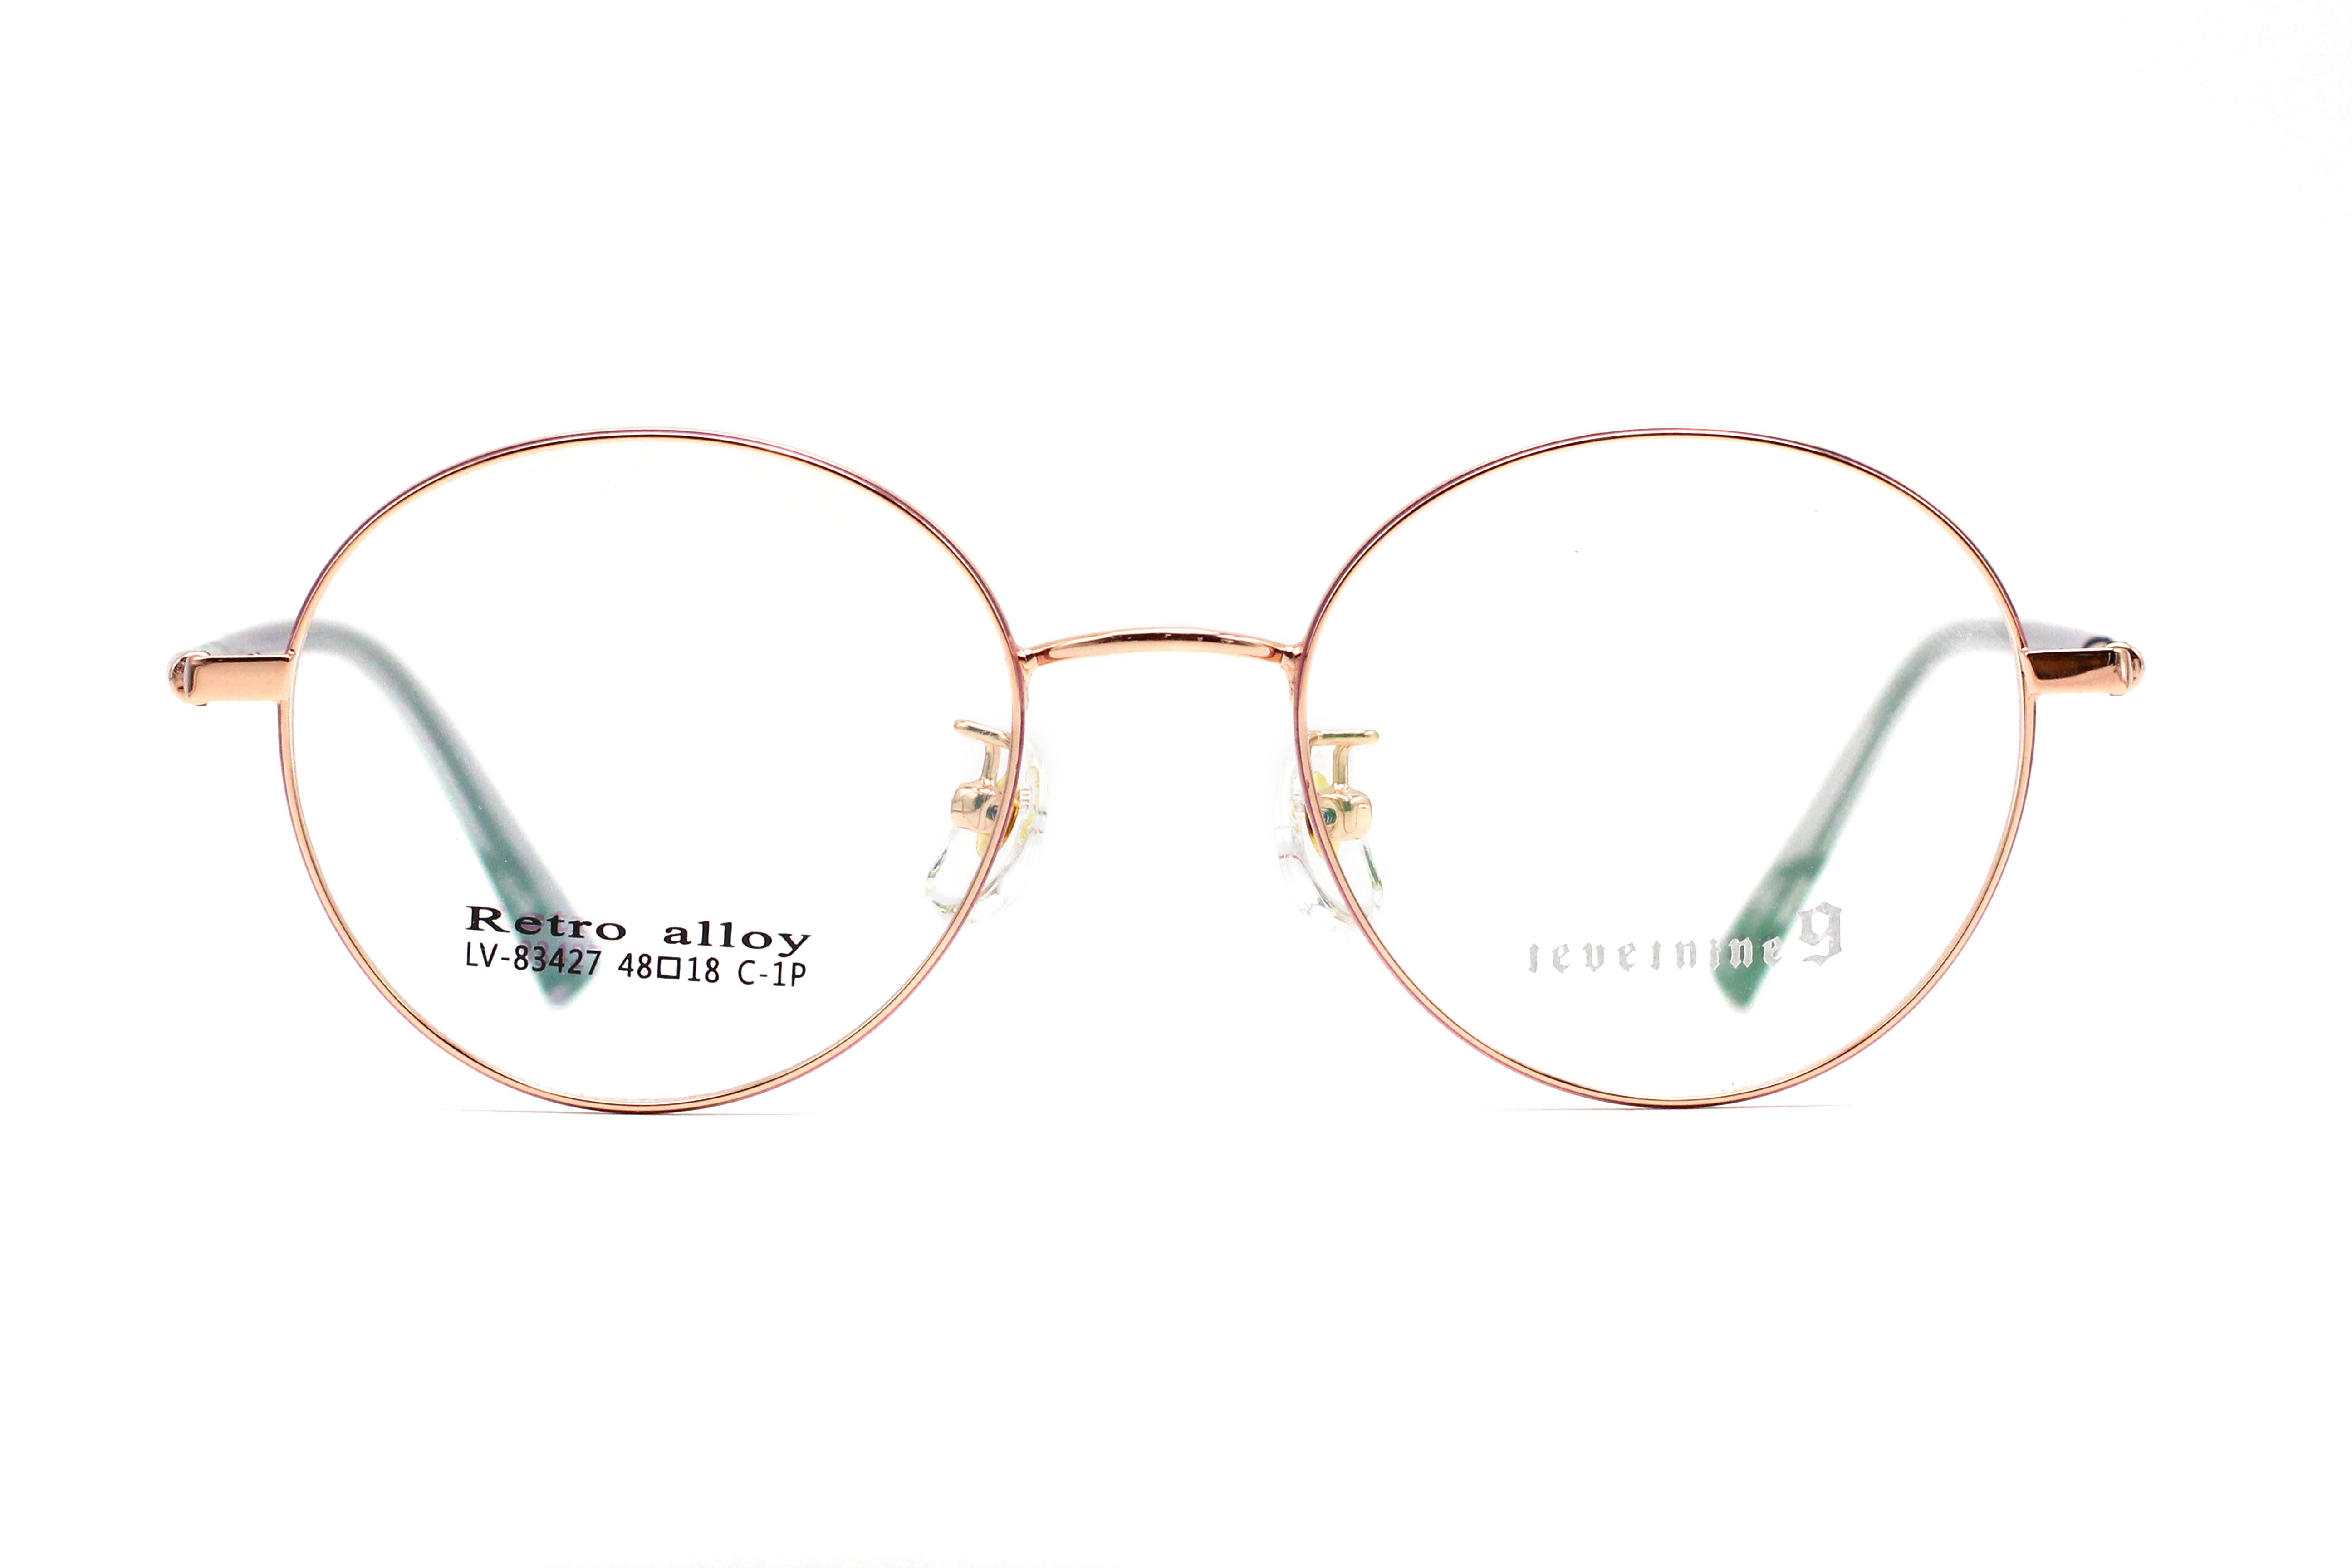 Wholesale Metal Glasses Frames 83427